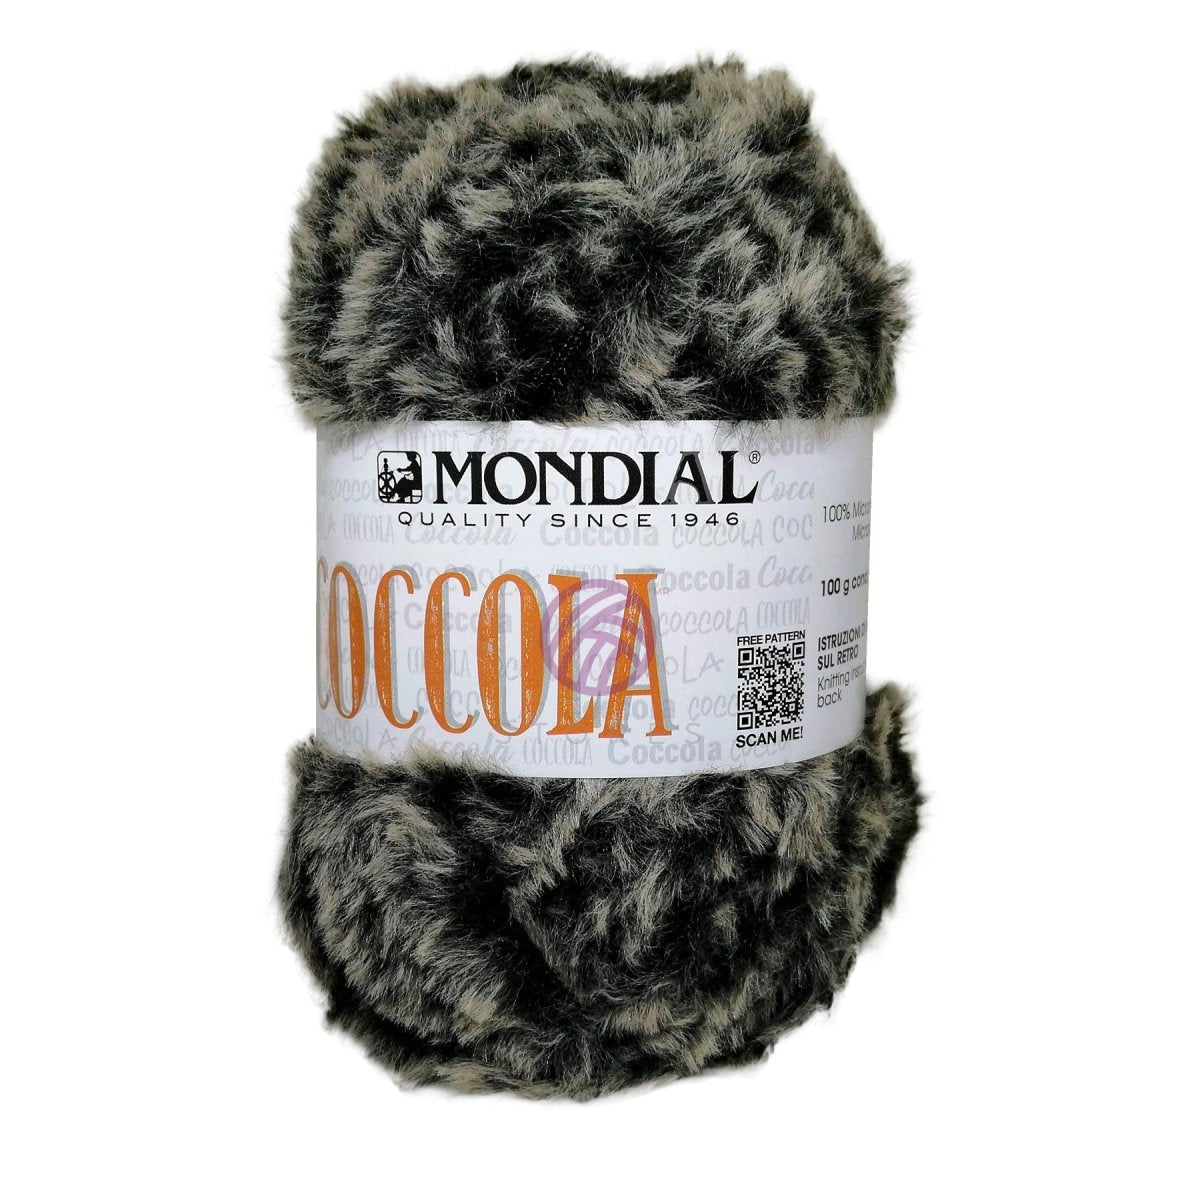 COCCOLA - Crochetstores12535618020586355877